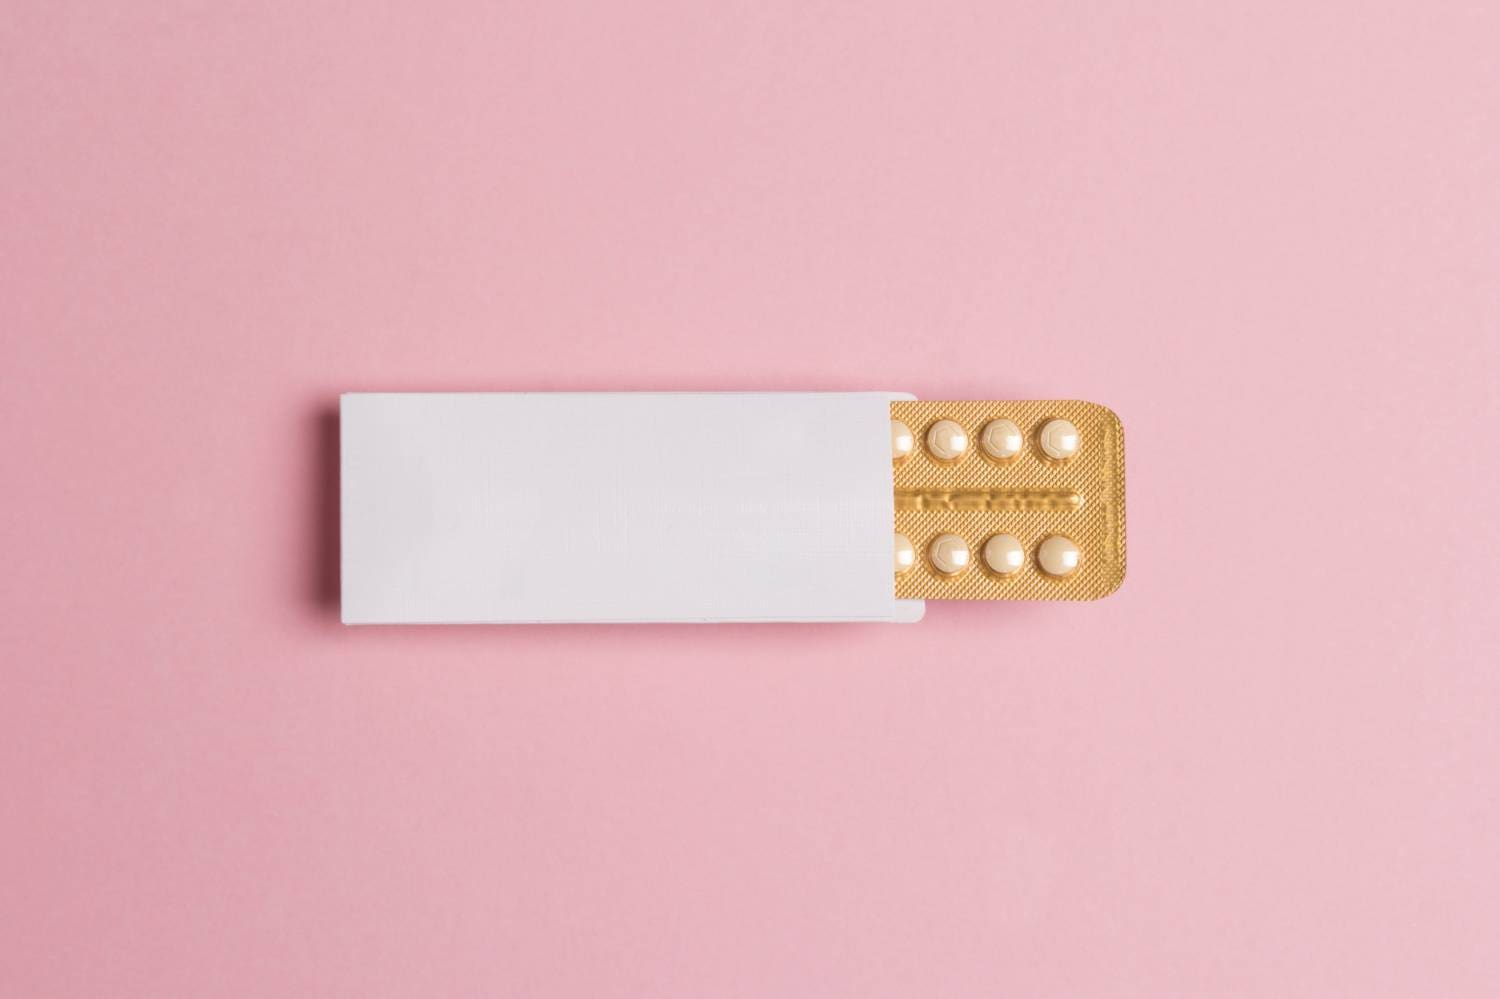 Contraception: the mini (progestogen-only) pill